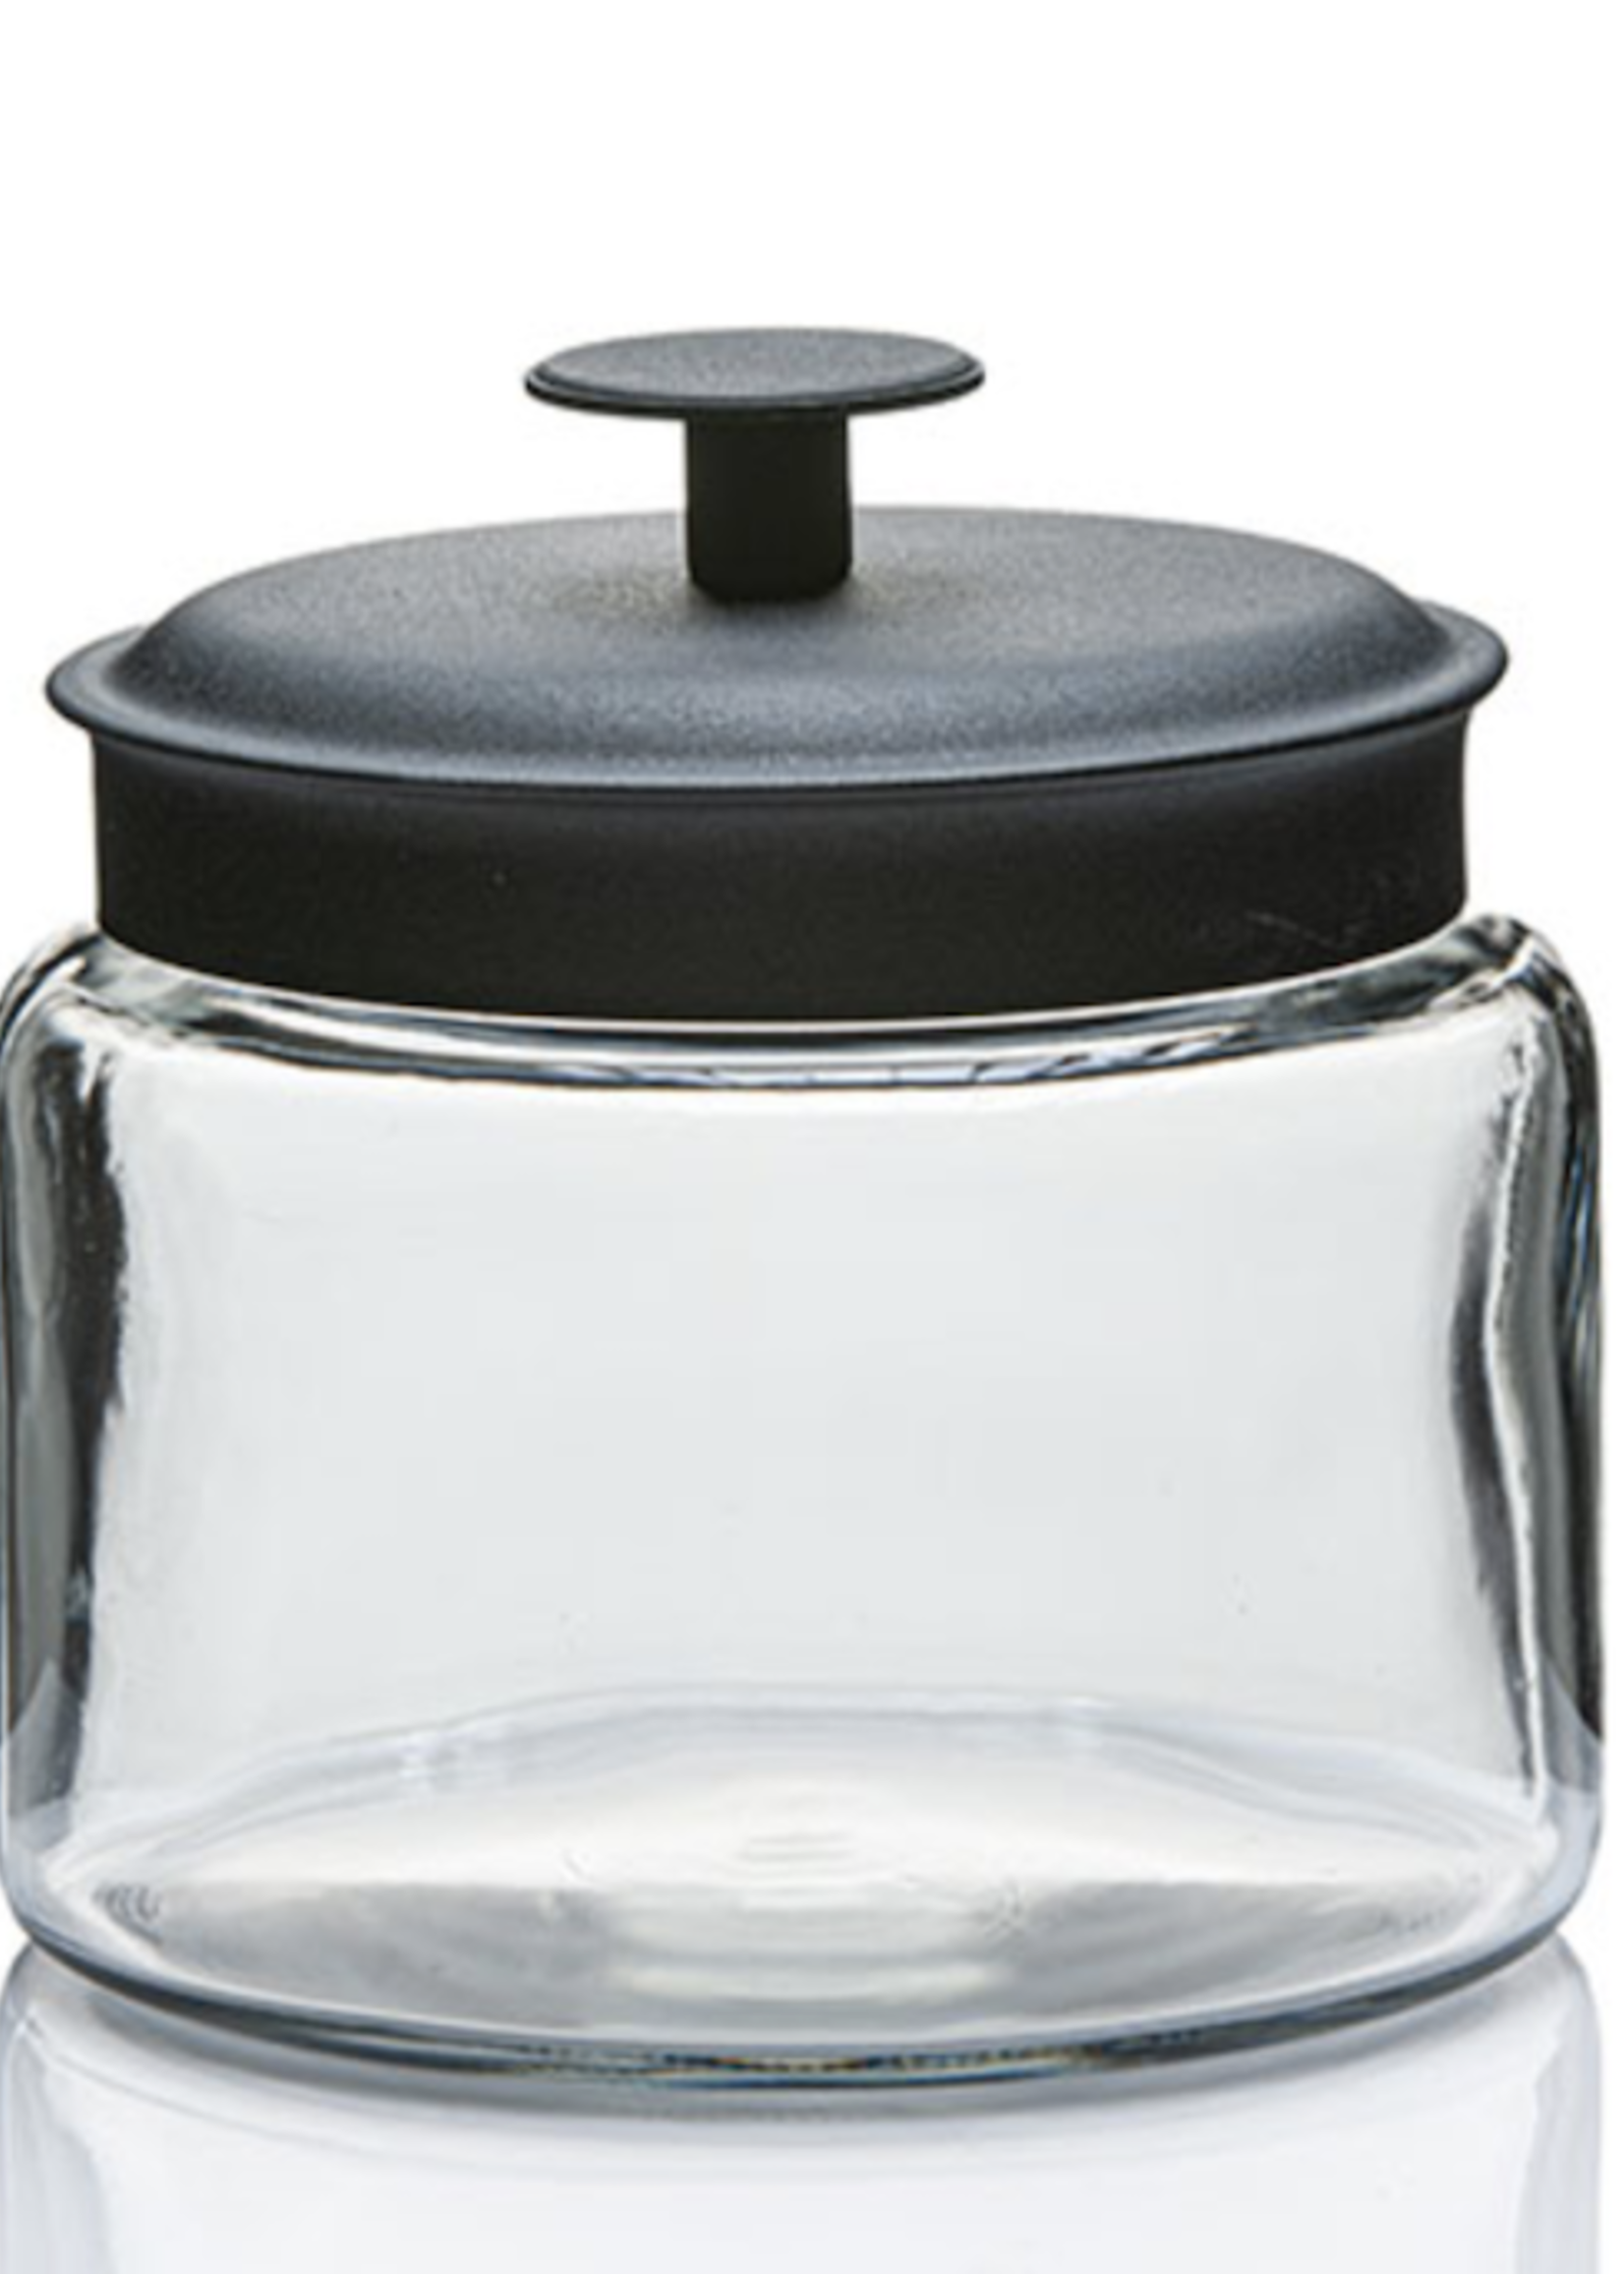 The Jar Store 48 oz Jar with Black Lid